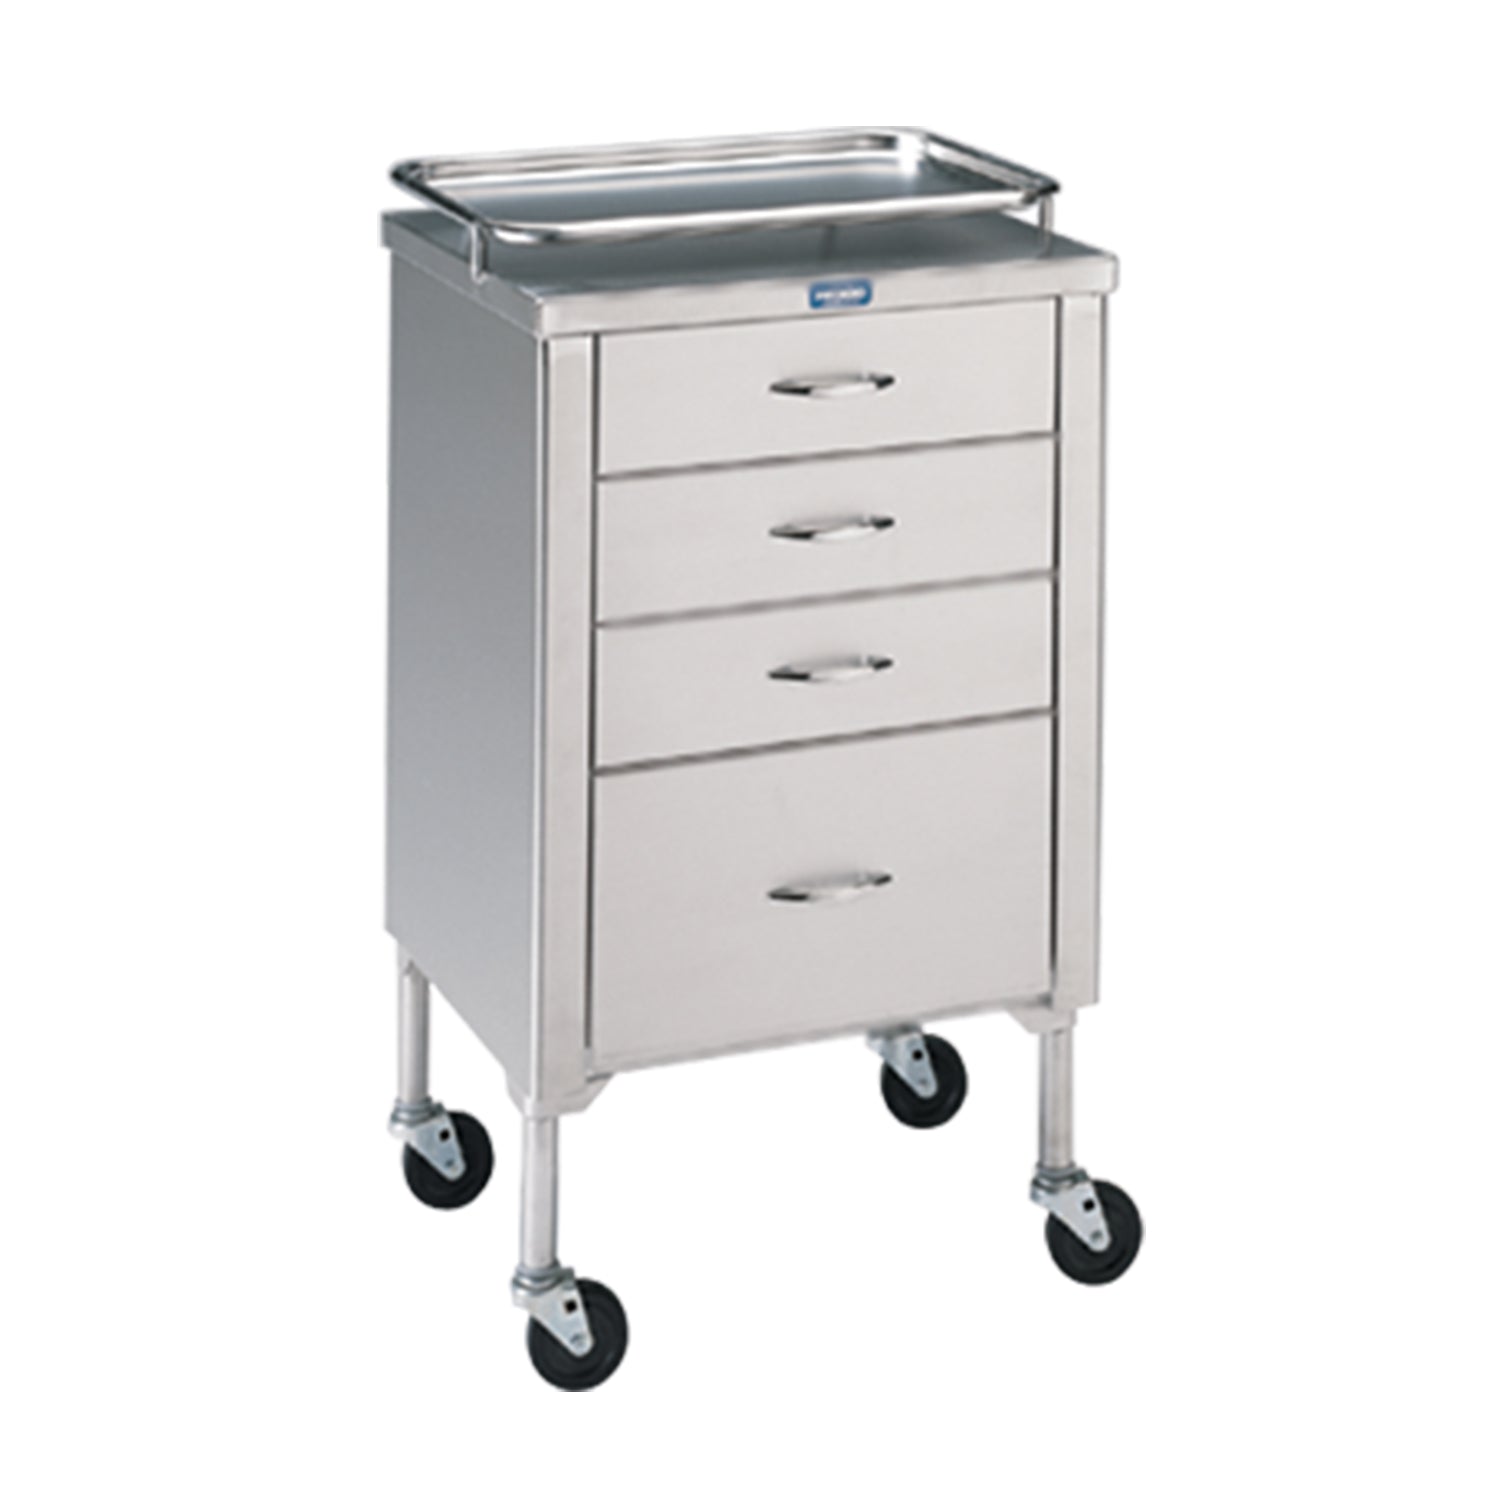 Accessory: Pedigo Anesthetist Carts and Cabinets